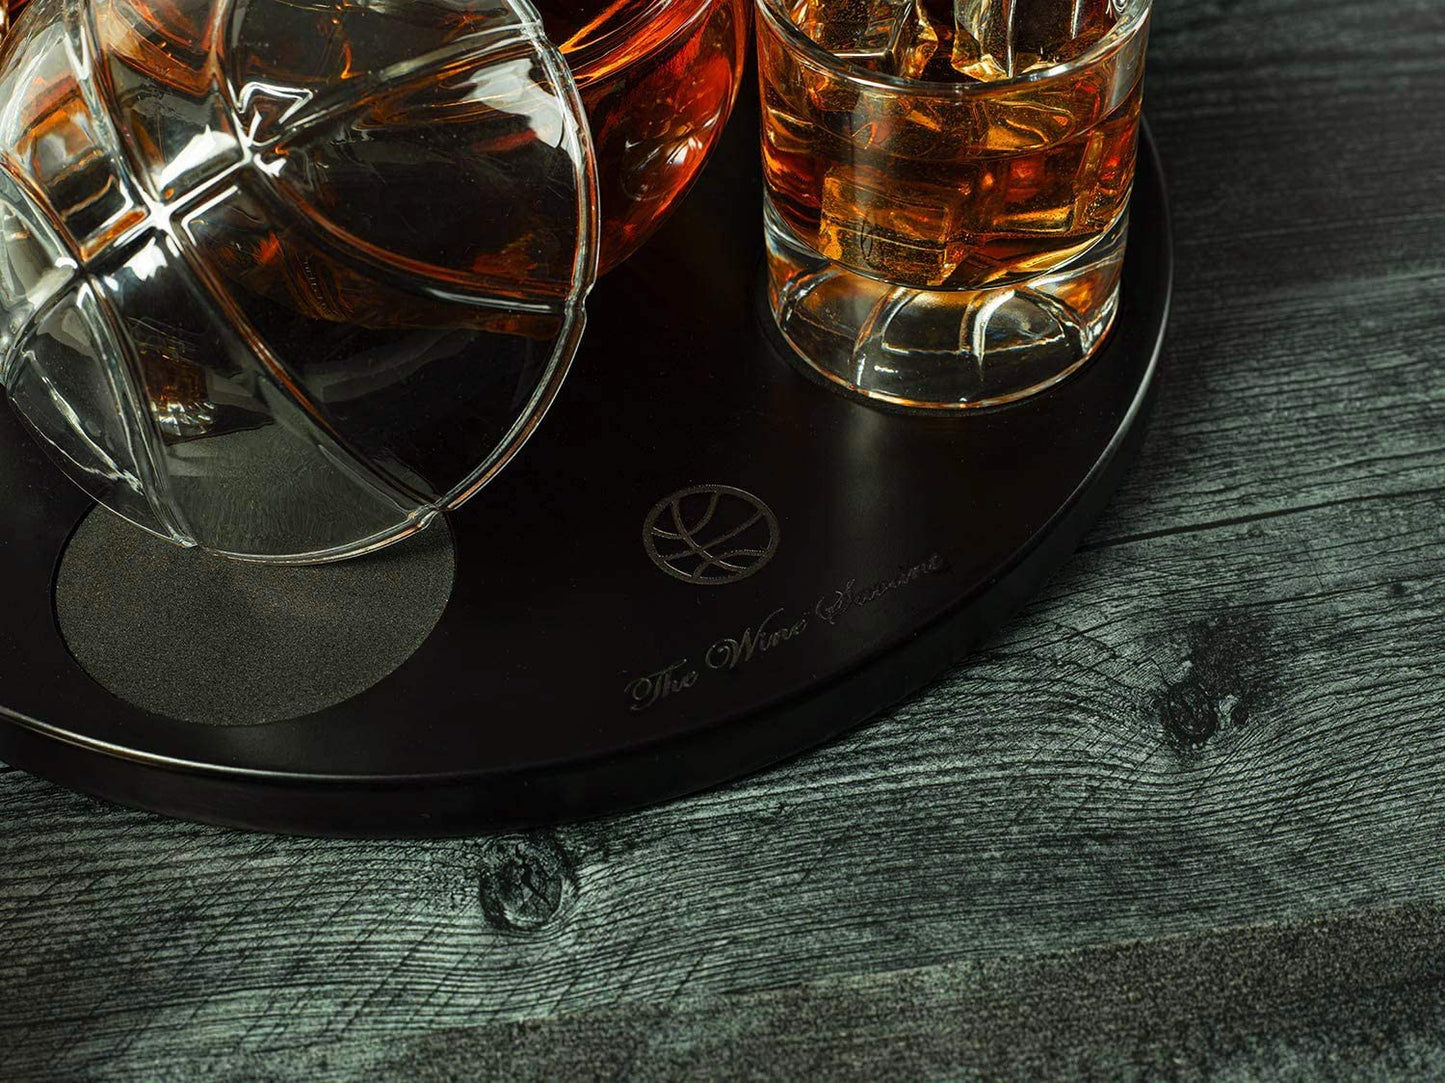 The Wine Savant - Basketball Decanter Set - Whiskey Scotch or Bourbon Decanter - 850ml